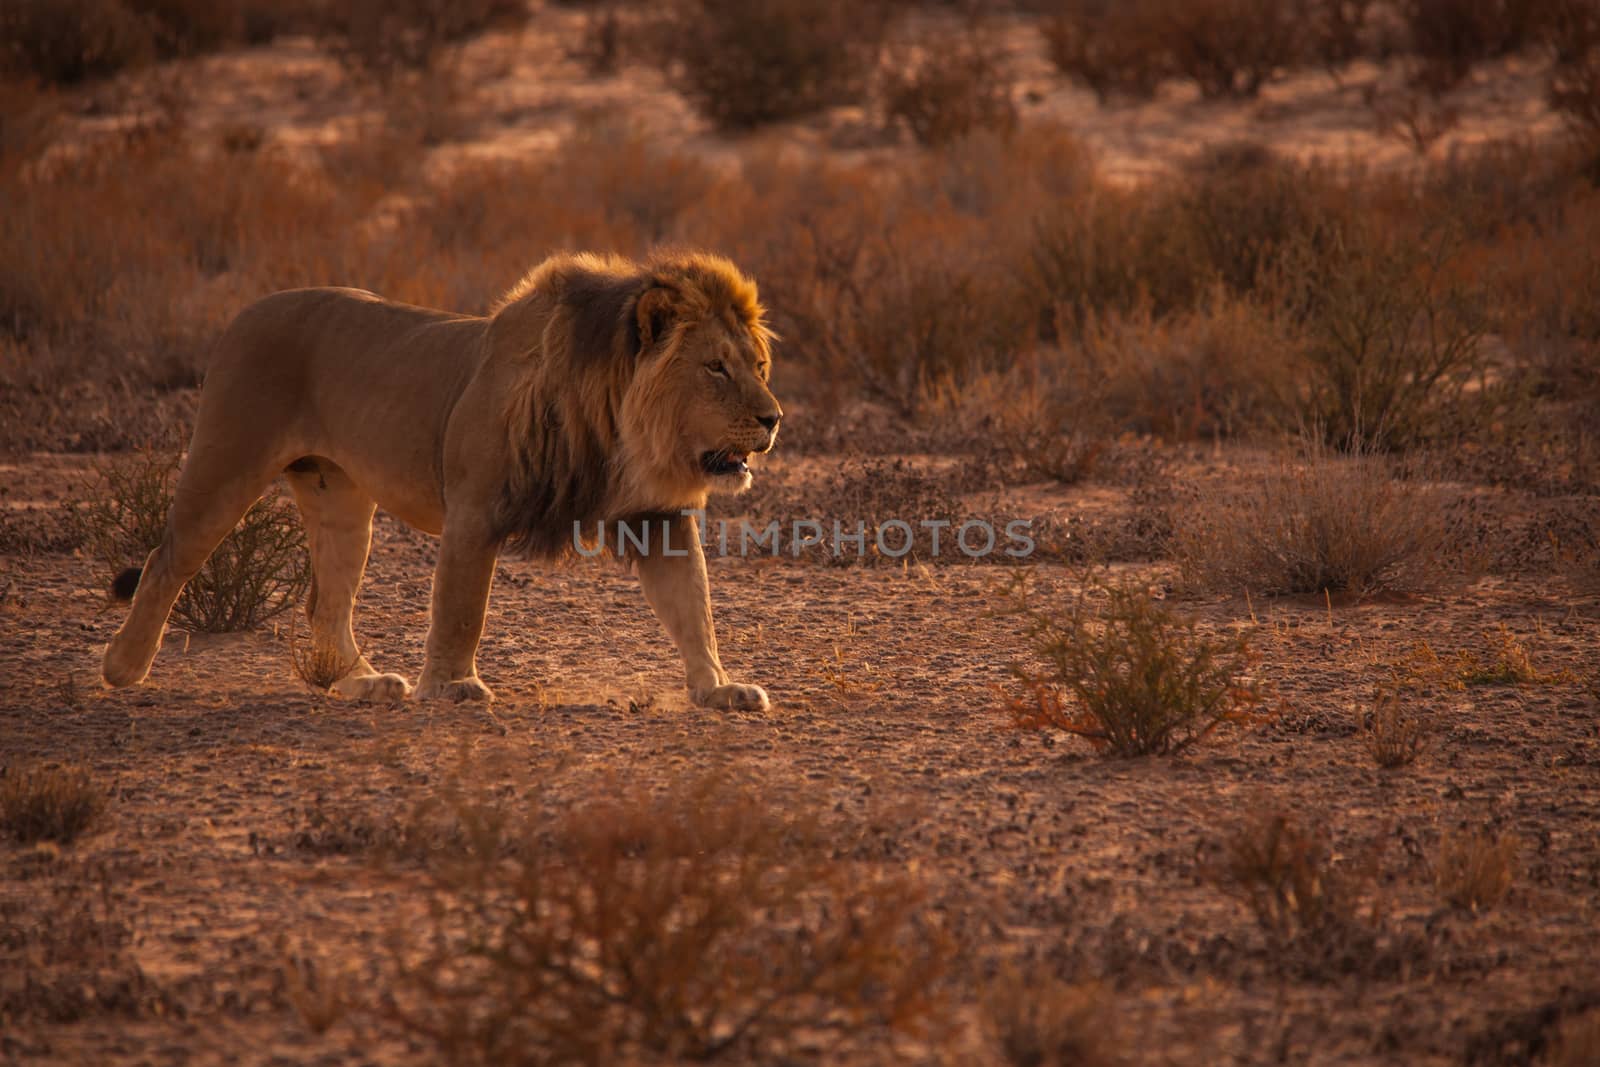 Kalahari Lion by kobus_peche